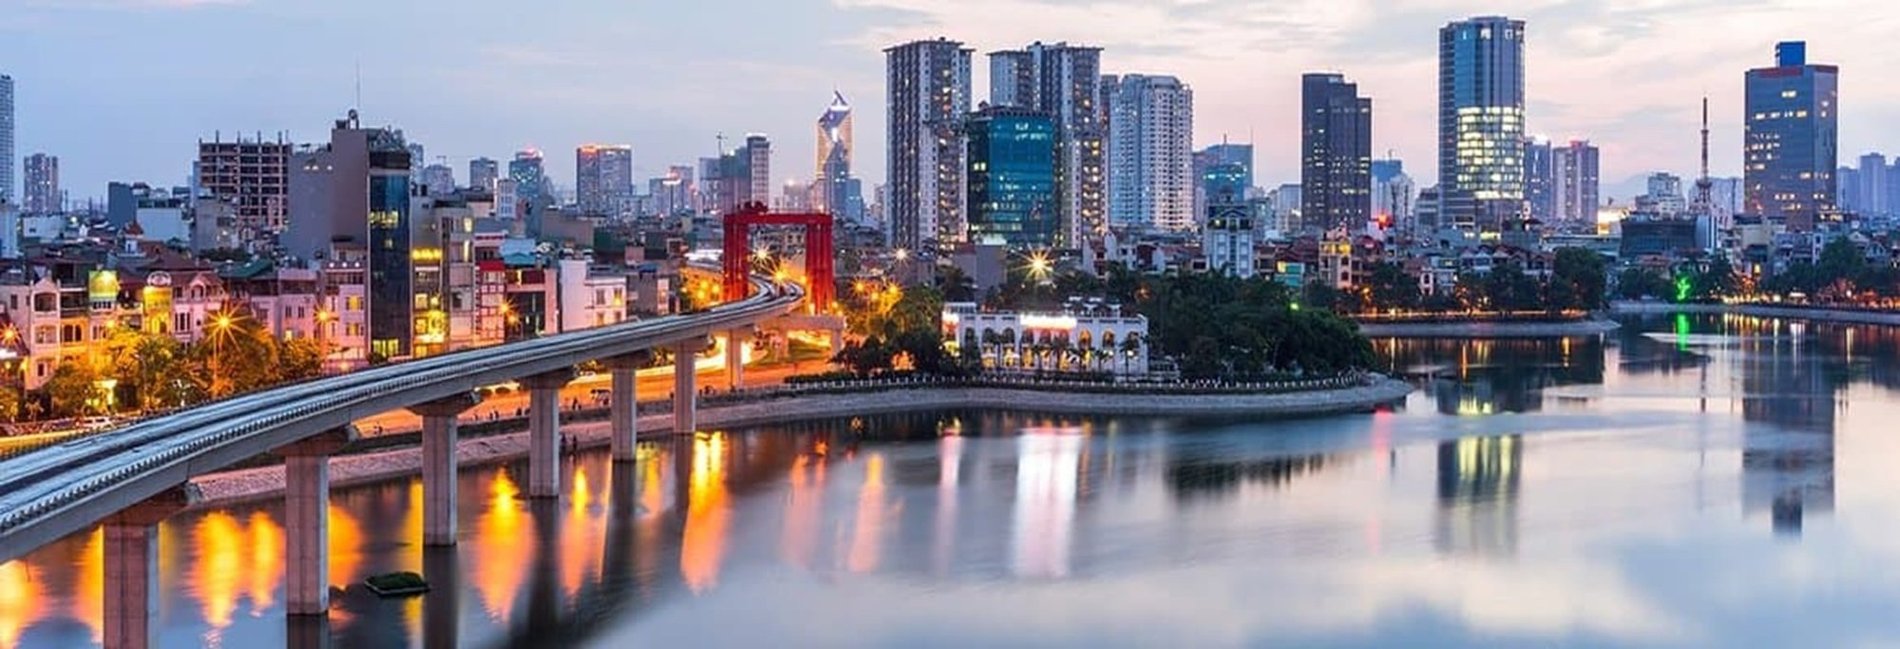 10 Things to Do in Hanoi